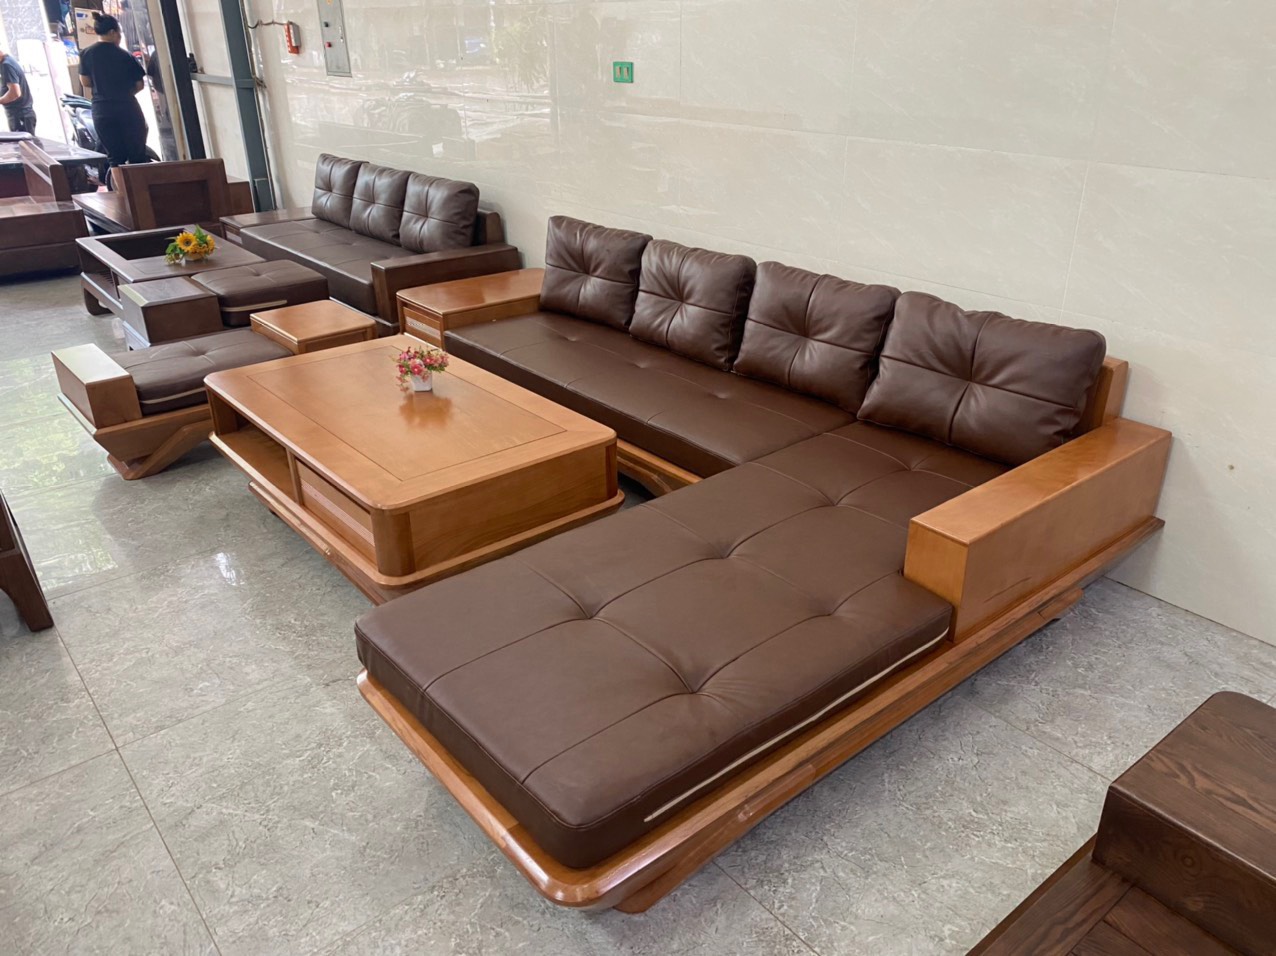 Bộ ghế gỗ sồi nệm da Tundo dày 15 cm kích thước 3m x 2m x 80 cm